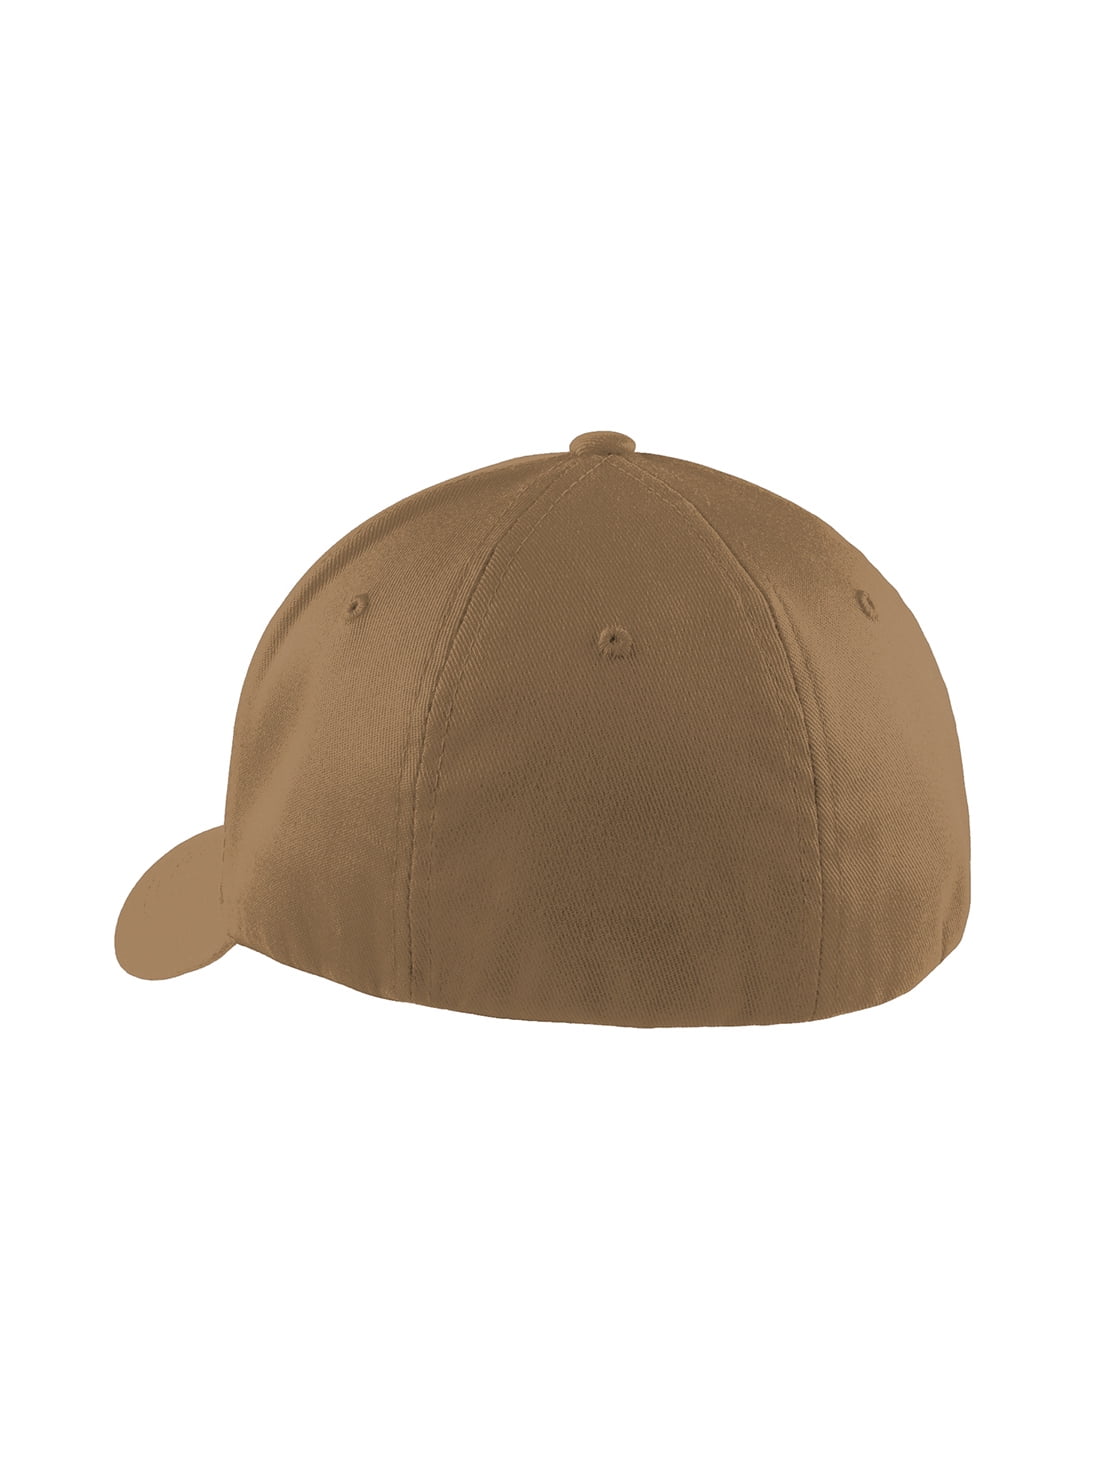 Top Headwear Flex Fit - Large/X-Large Brown Baseball Cap - Woodland